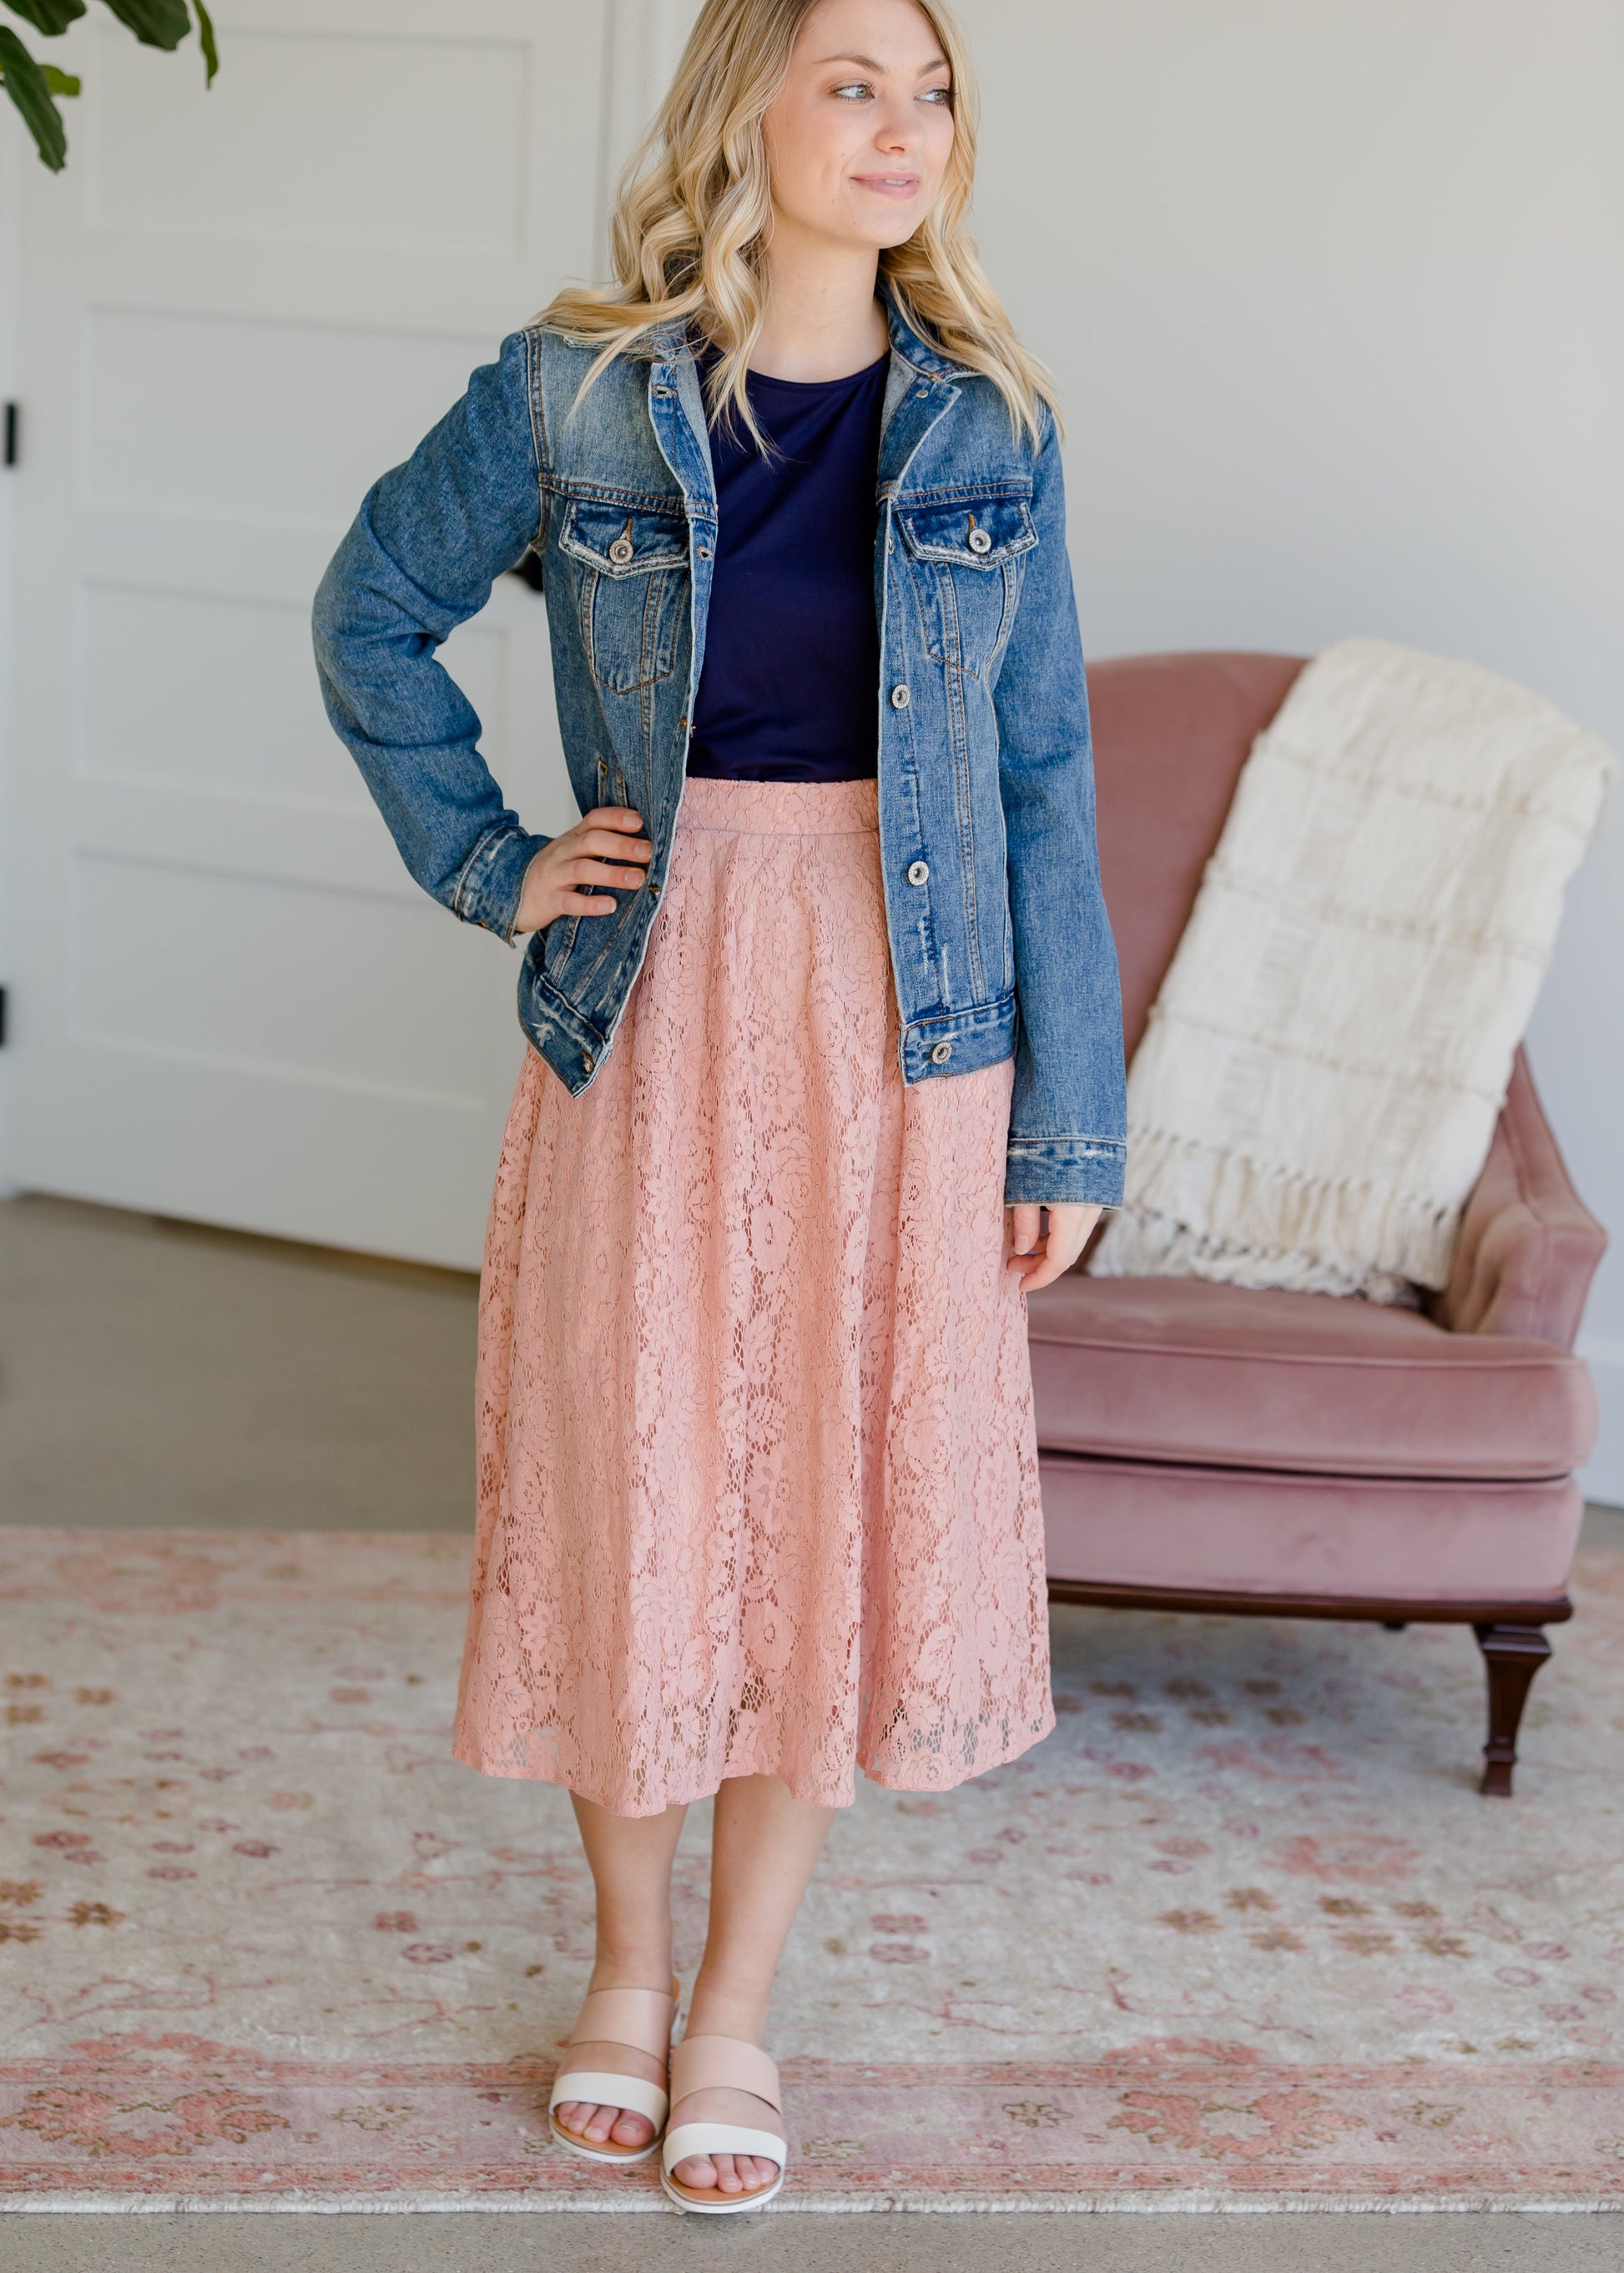 Lace Stretch Waist Midi Skirt - FINAL SALE Skirts